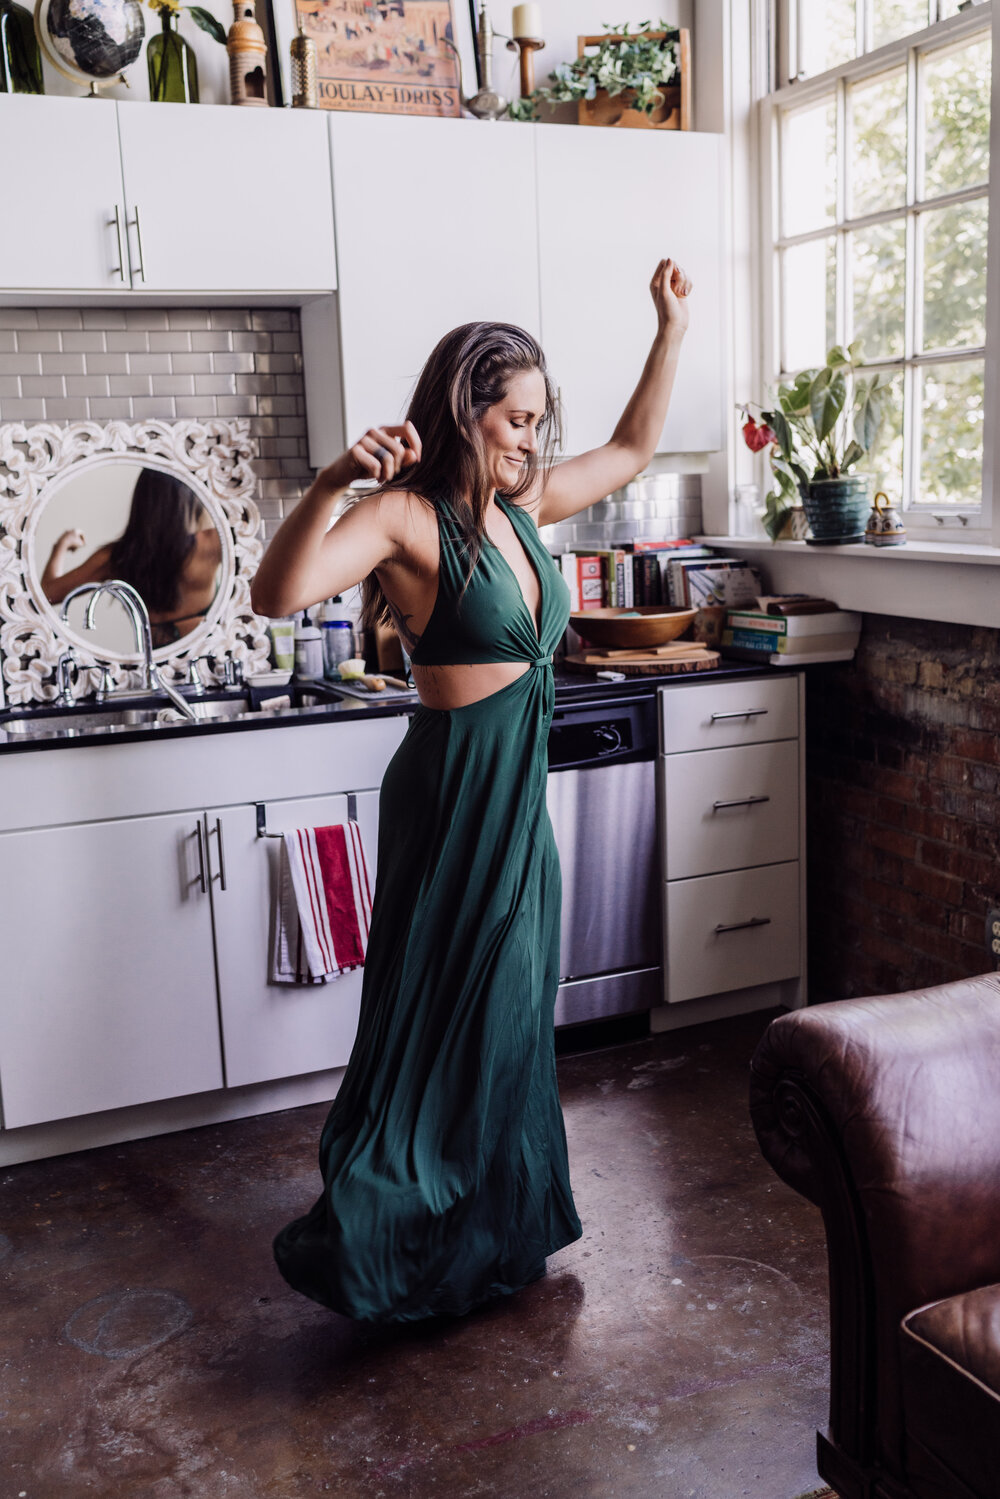 Oklahoma City Boudoir Photographer Dallas boudoir session woman dancing in kitchen